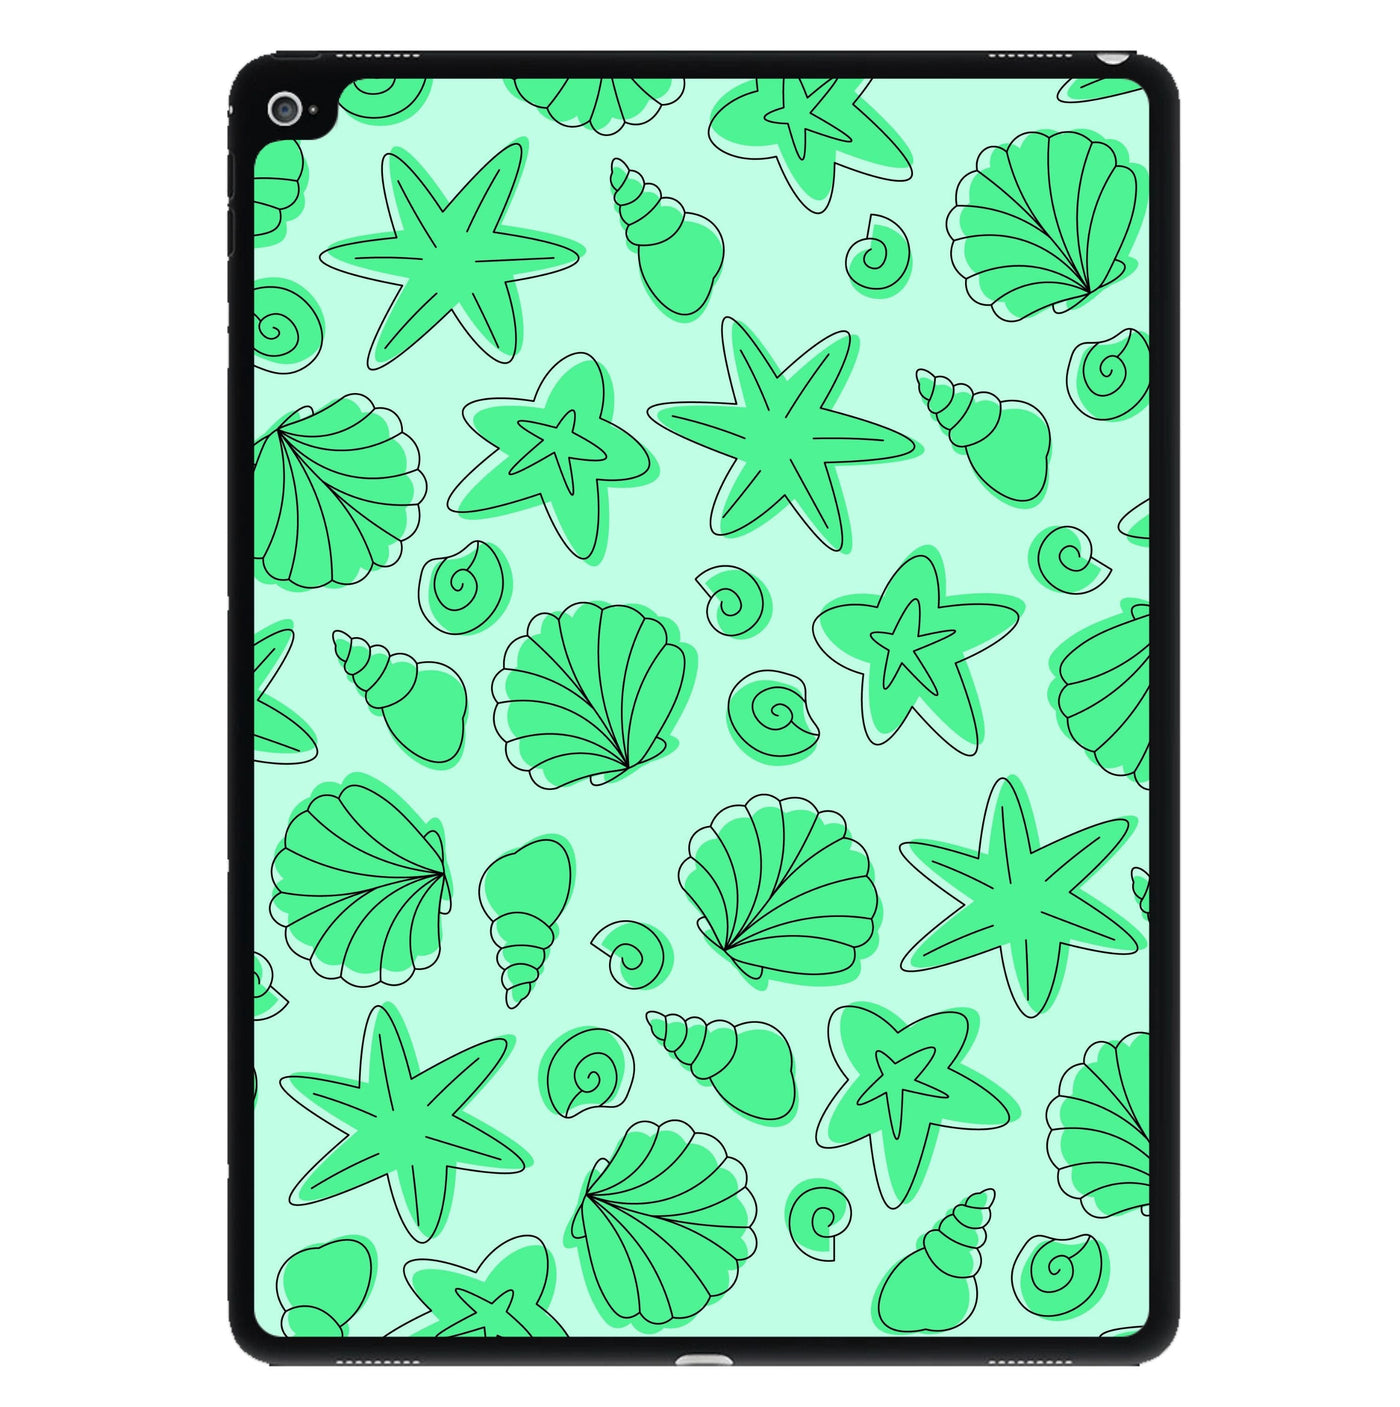 Seashells Pattern 4 iPad Case